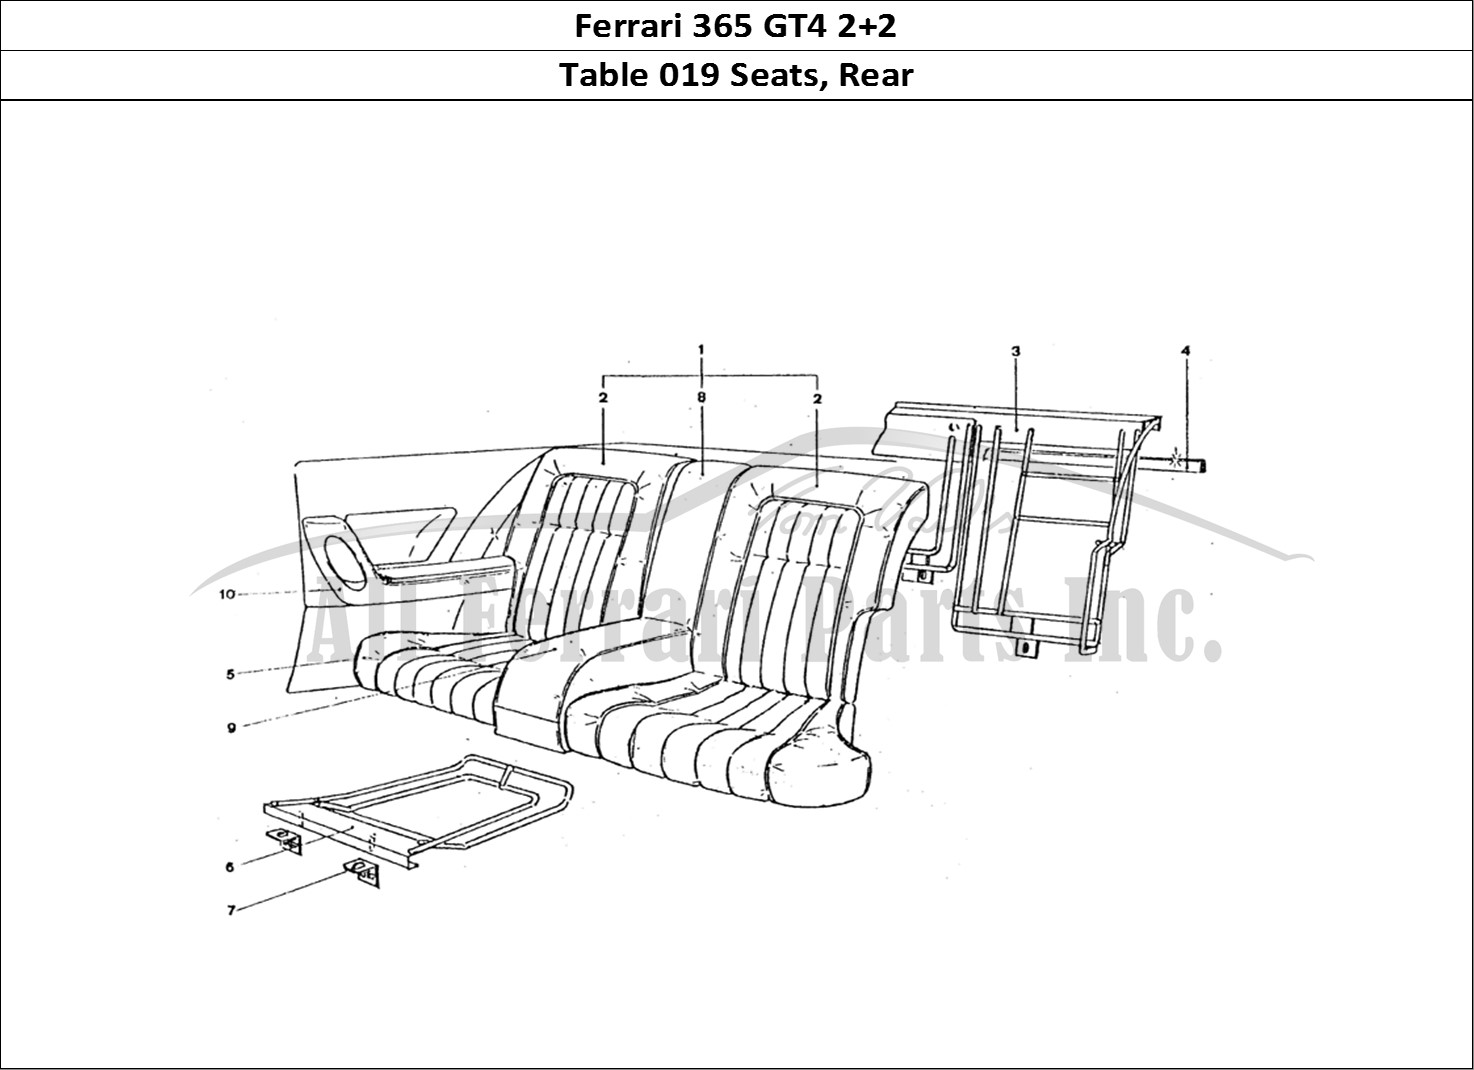 Ferrari Parts Ferrari 365 GT4 2+2 Coachwork Page 019 Rear Seats